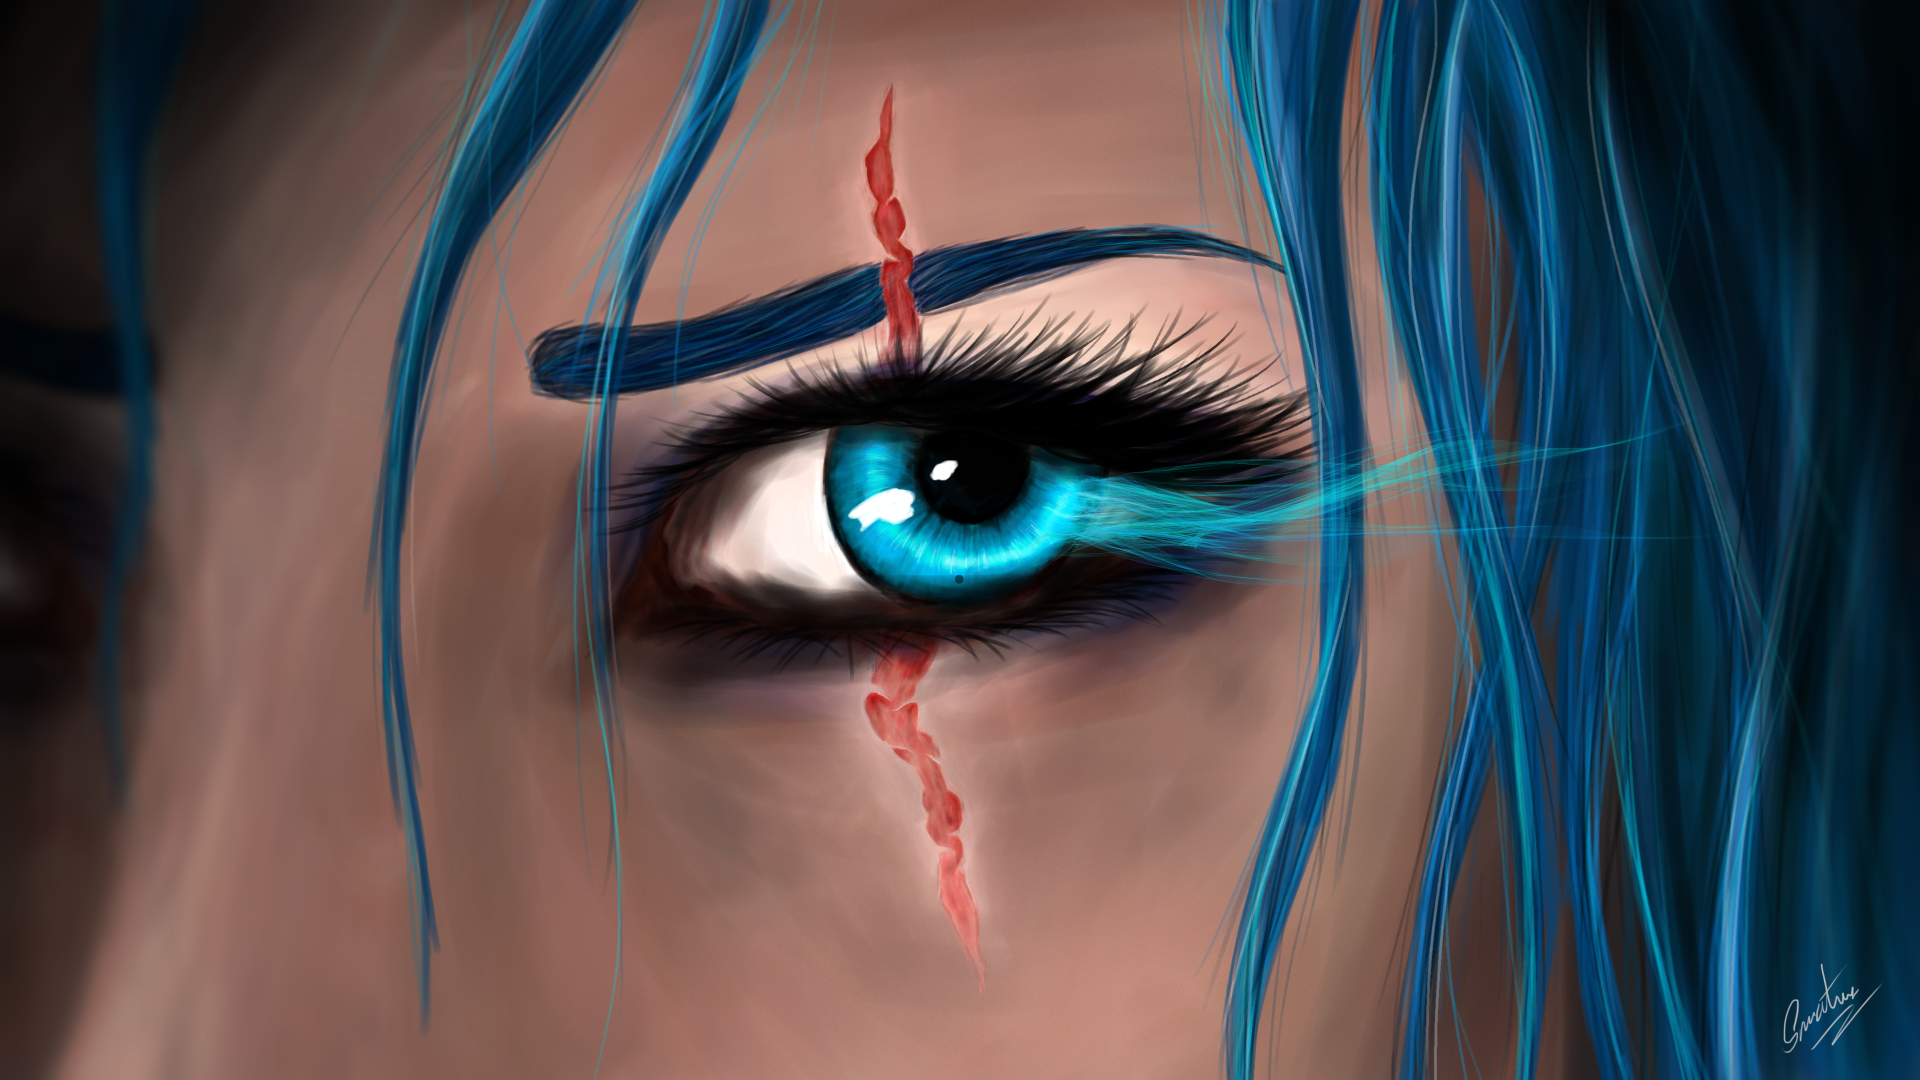 scar wallpaper,face,blue,eyebrow,eyelash,eye